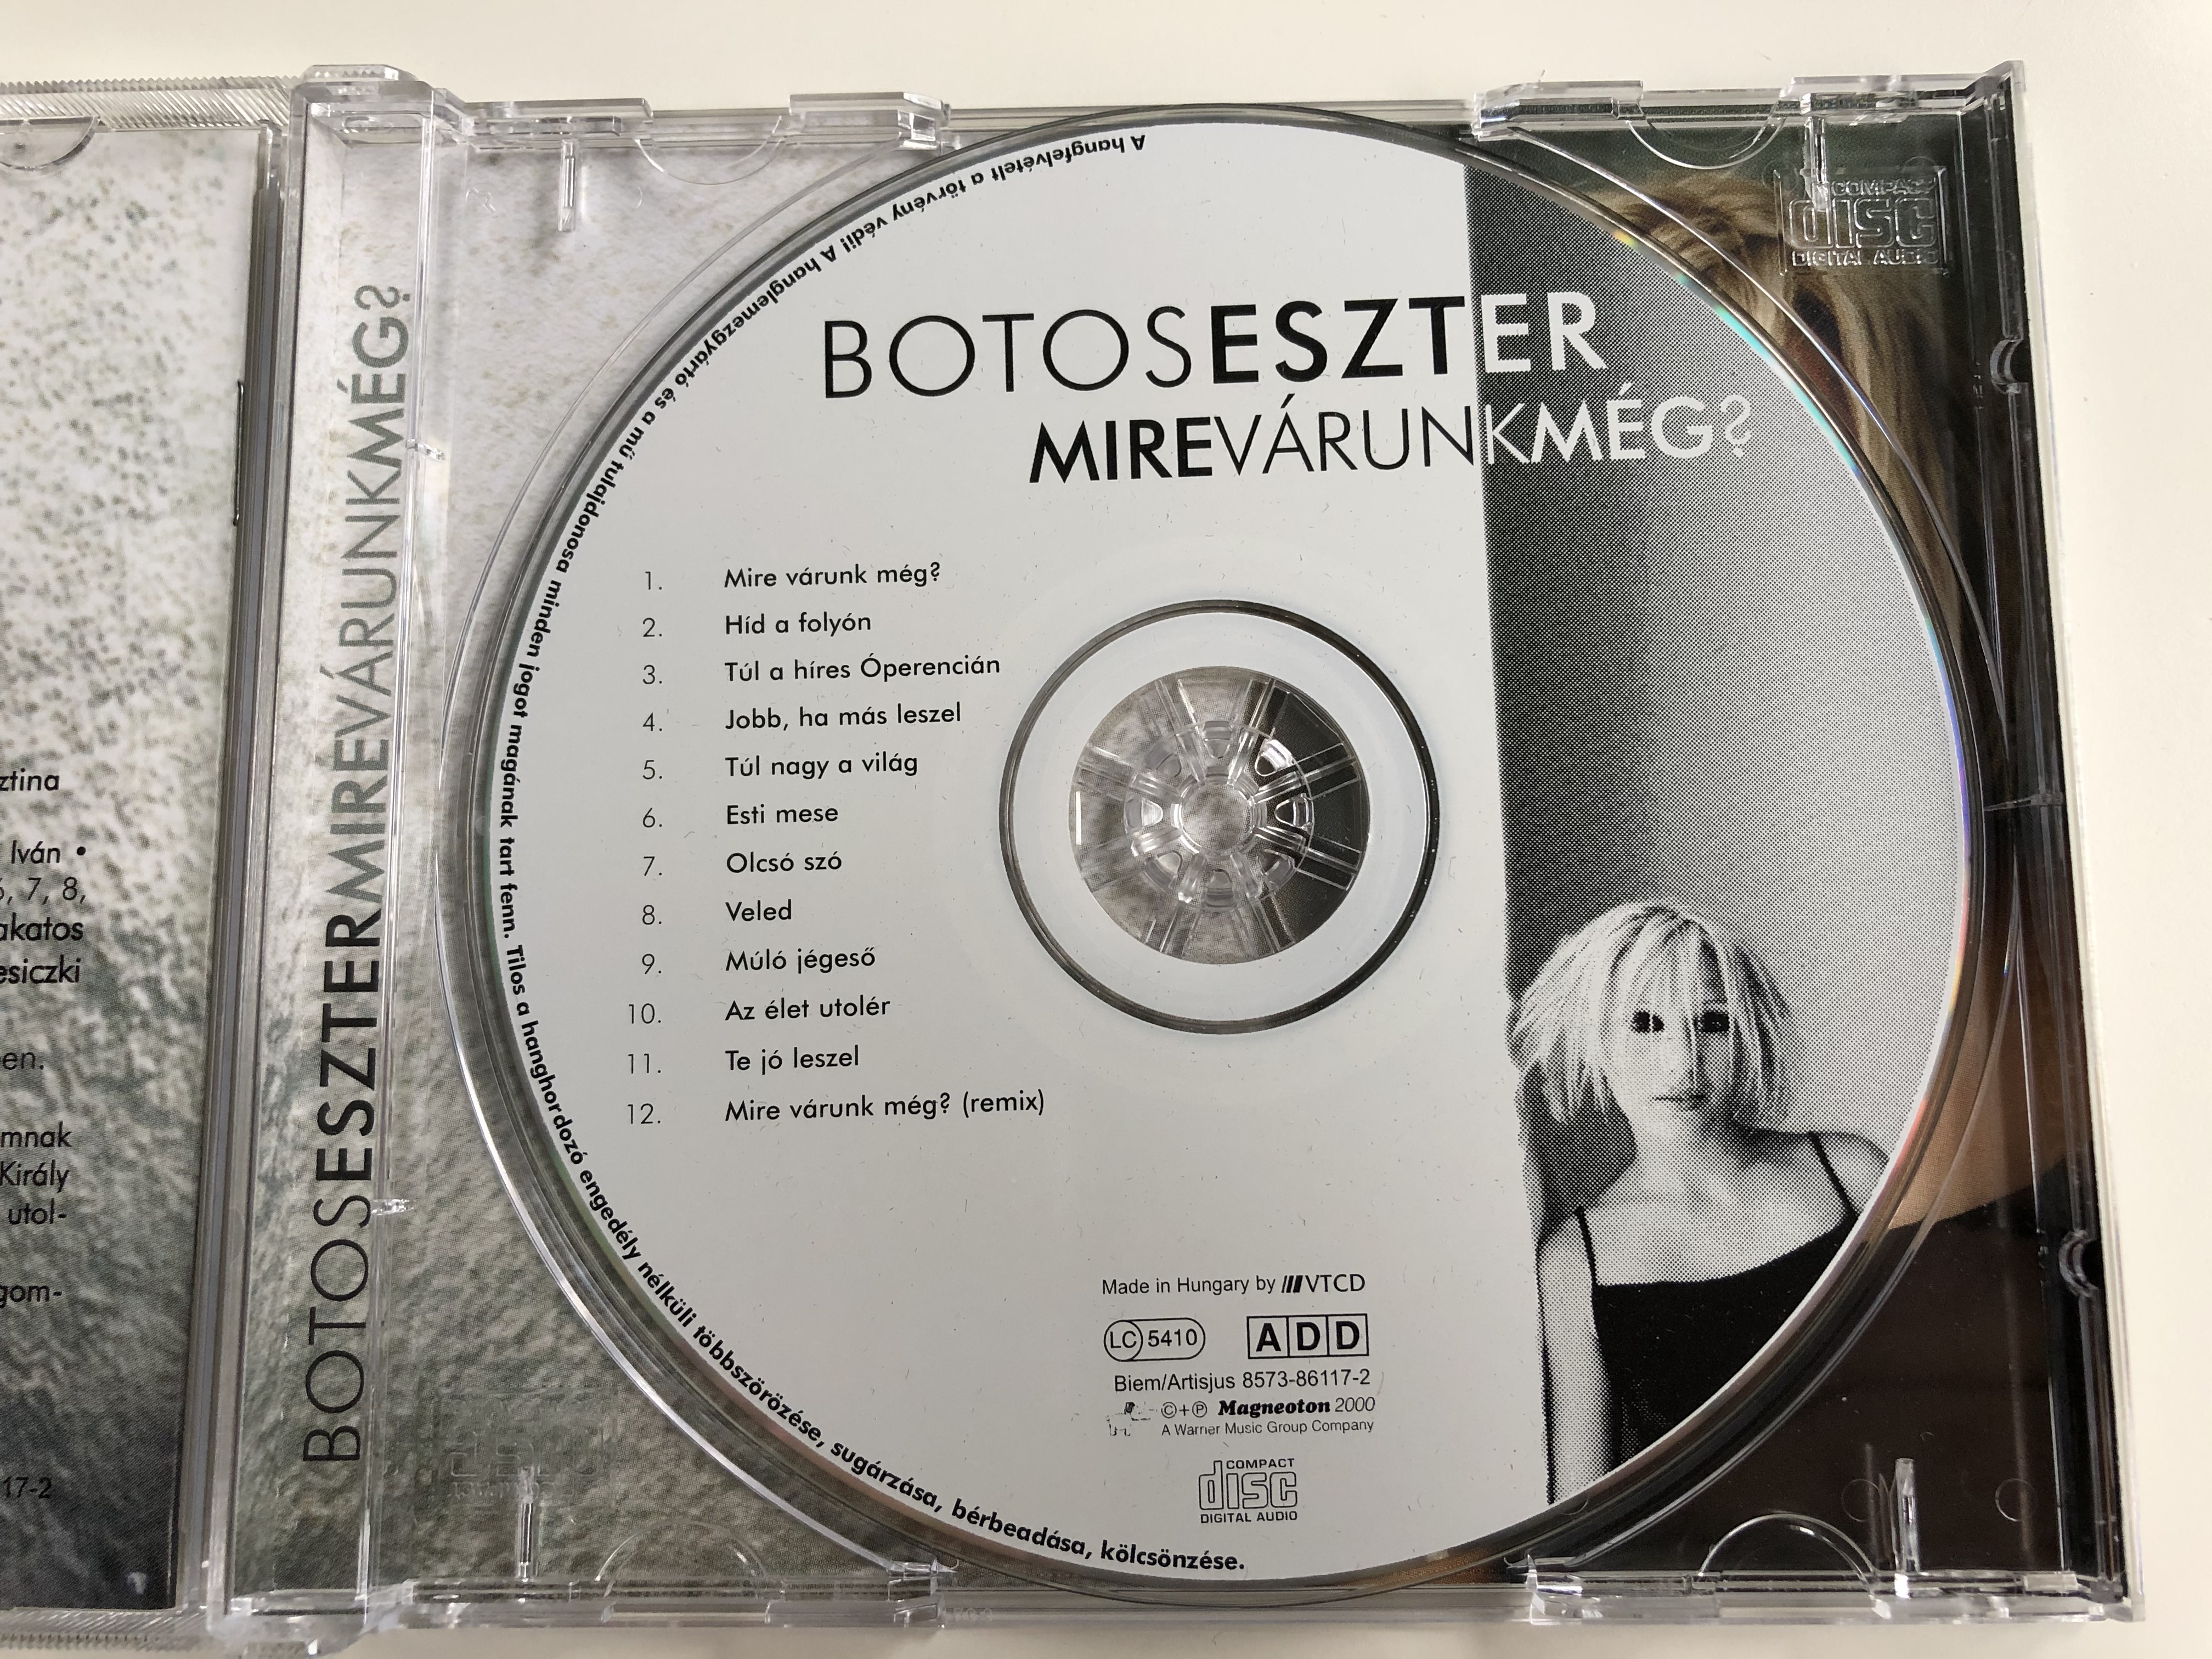 botos-eszter-mire-v-runk-m-g-magneoton-audio-cd-2000-8573-86117-2-3-.jpg